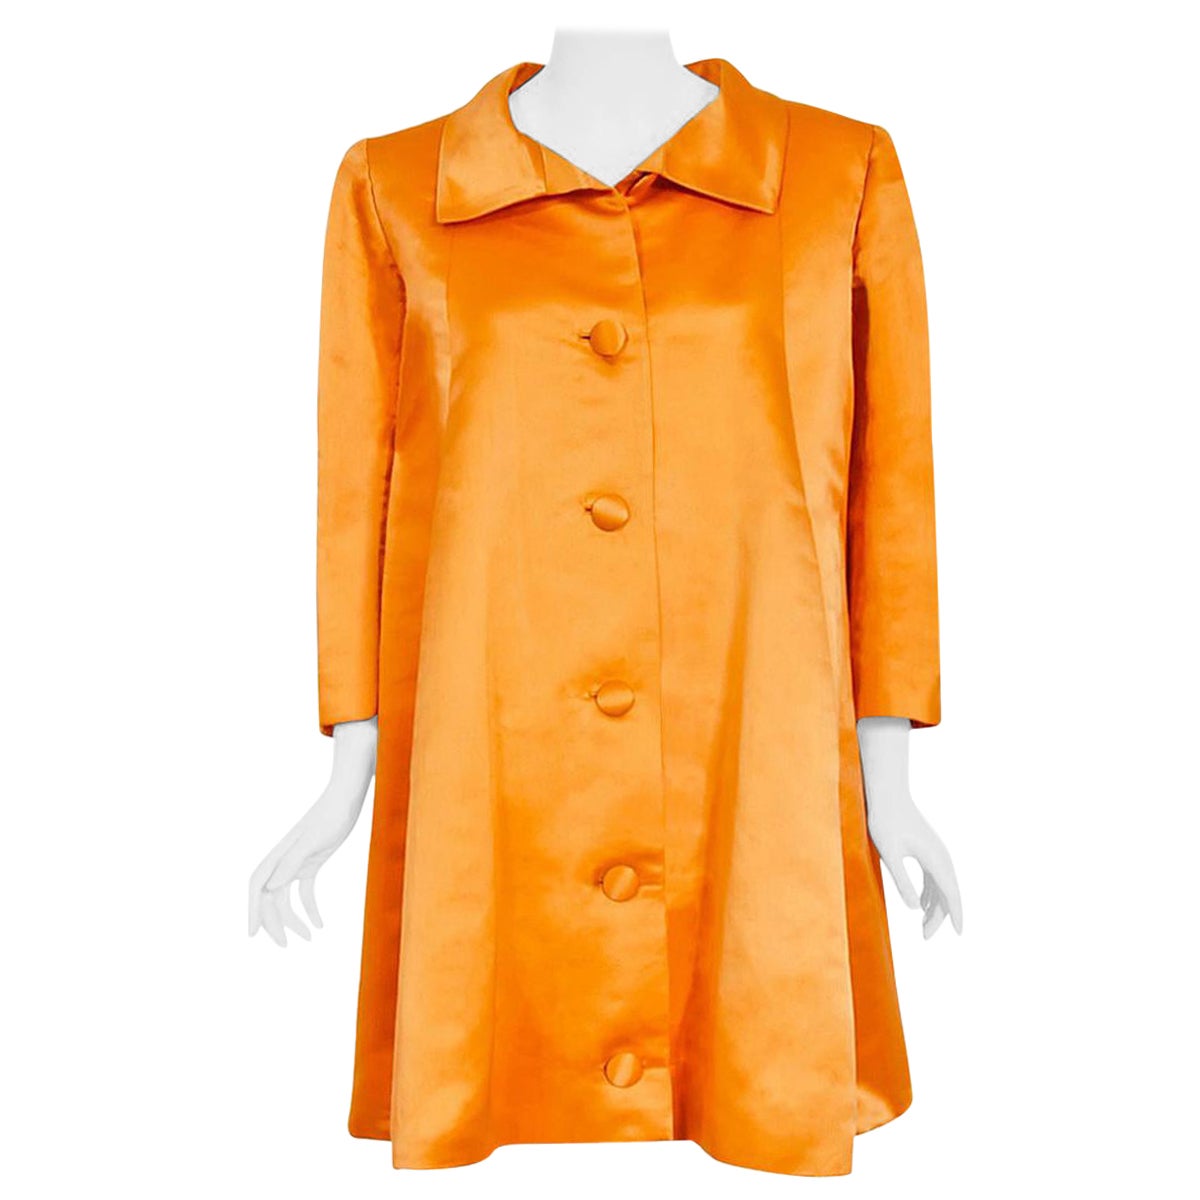 Vintage 1958 Balenciaga Haute Couture Orange Duchess Satin Swing Coat Jacket  For Sale